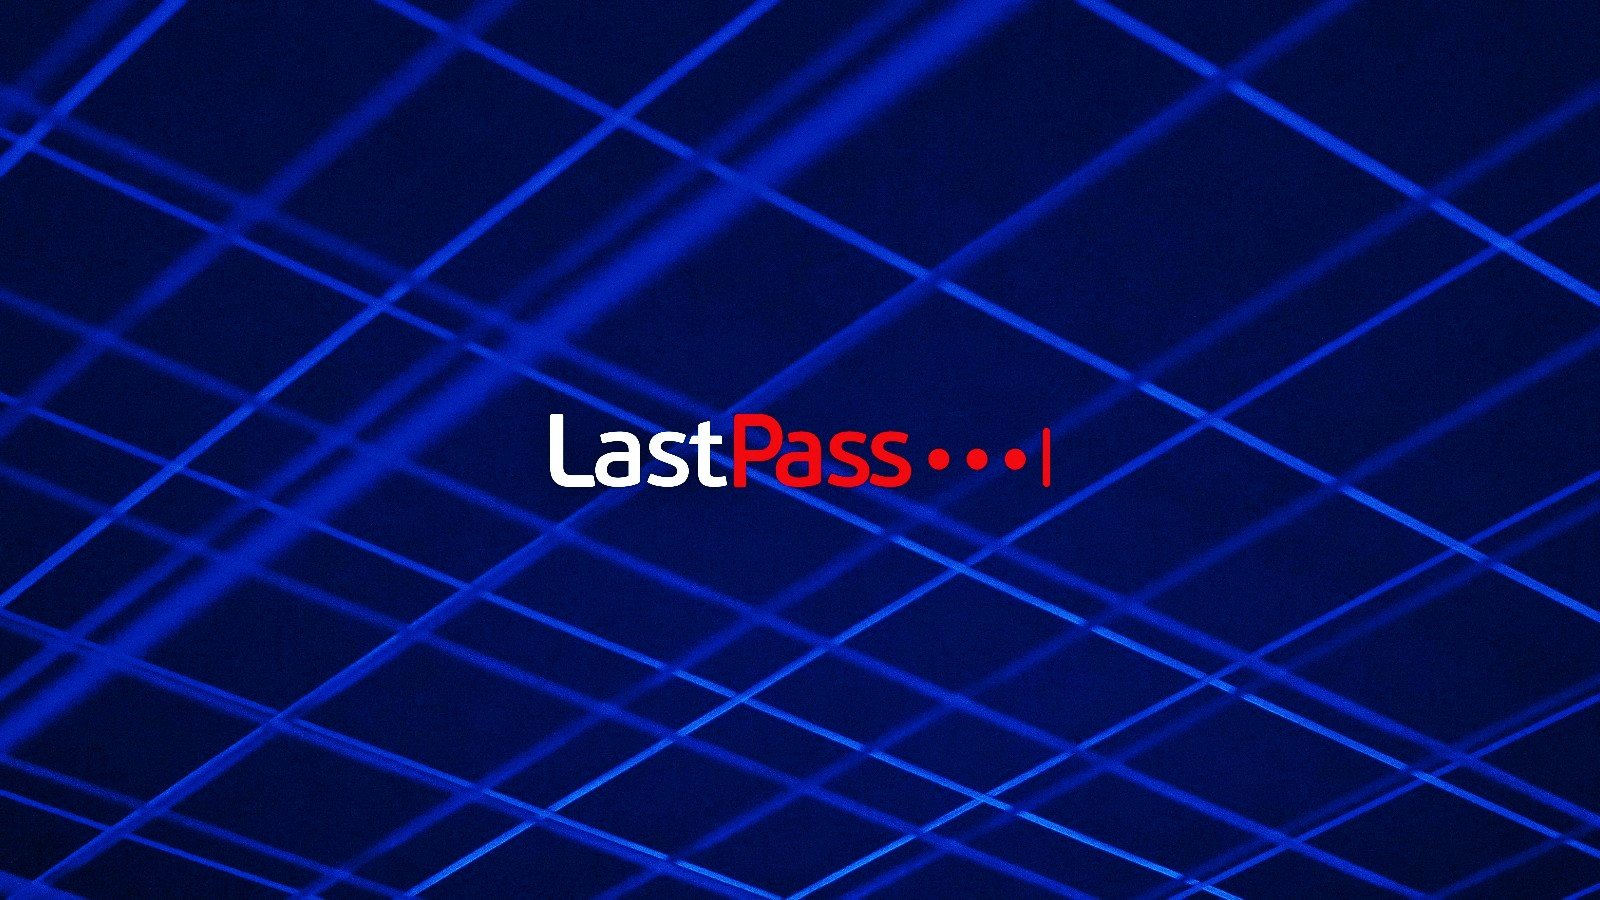 LastPass reveals data breach.